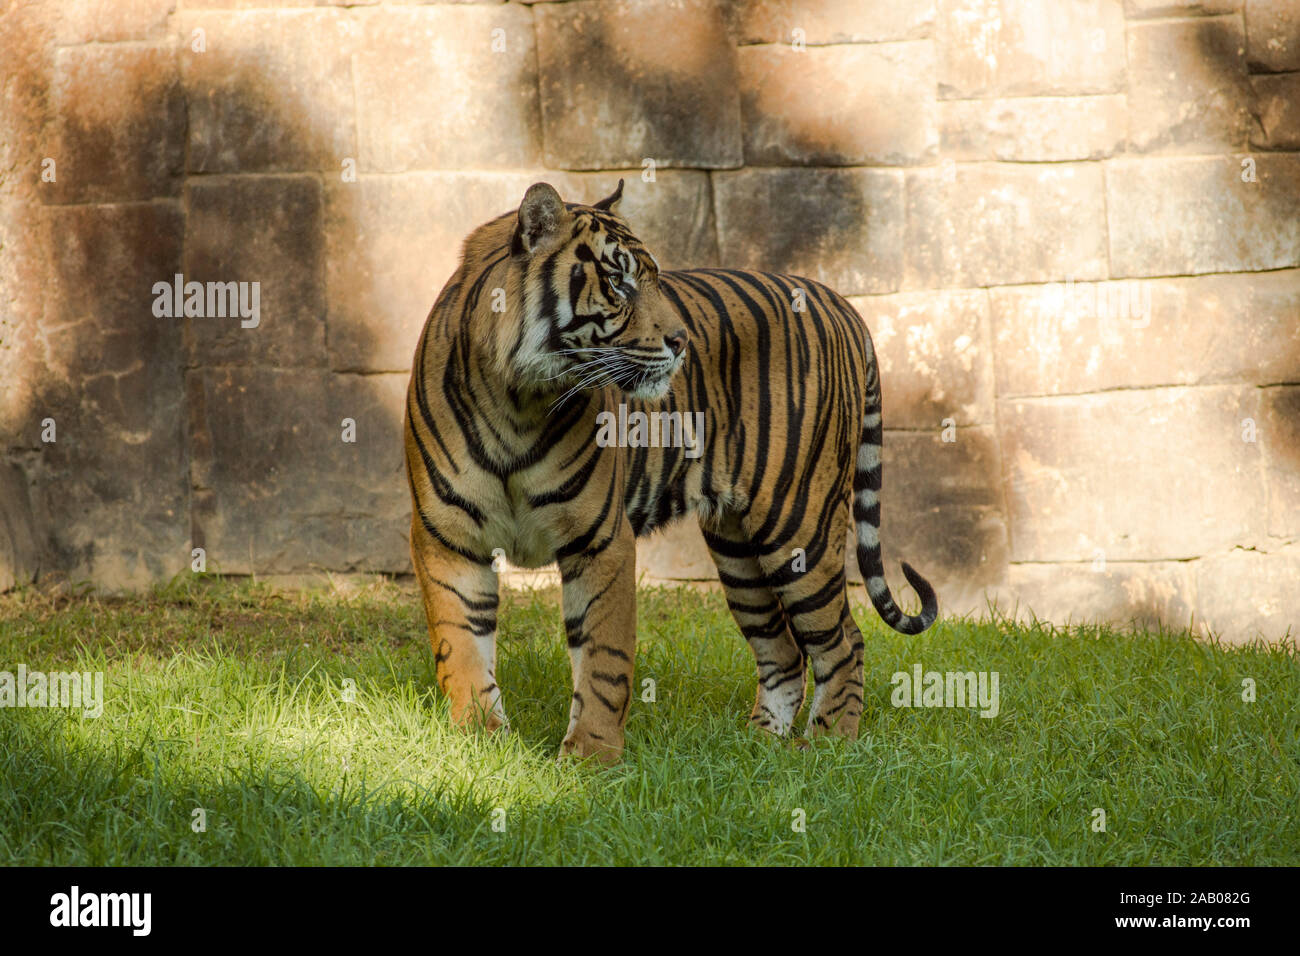 Tigre de Sumatra, Panthera tigris sumatrae en pièce jointe, le zoo Bioparc Fuengirola, Espagne. Banque D'Images